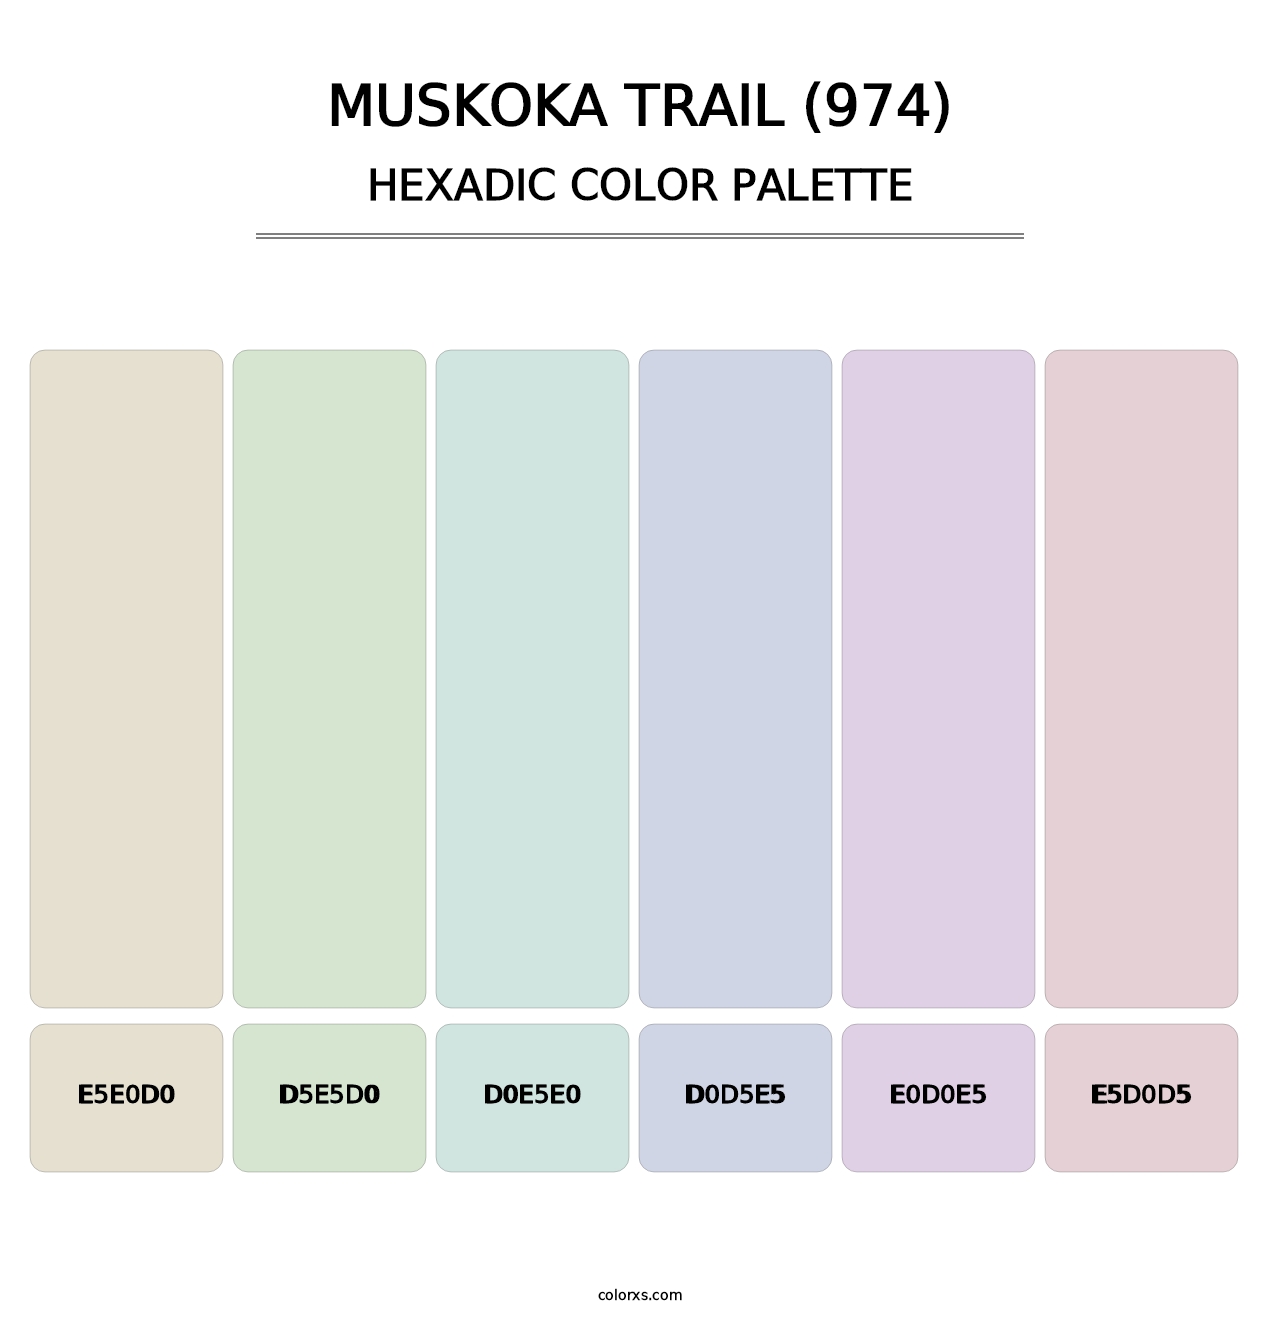 Muskoka Trail (974) - Hexadic Color Palette